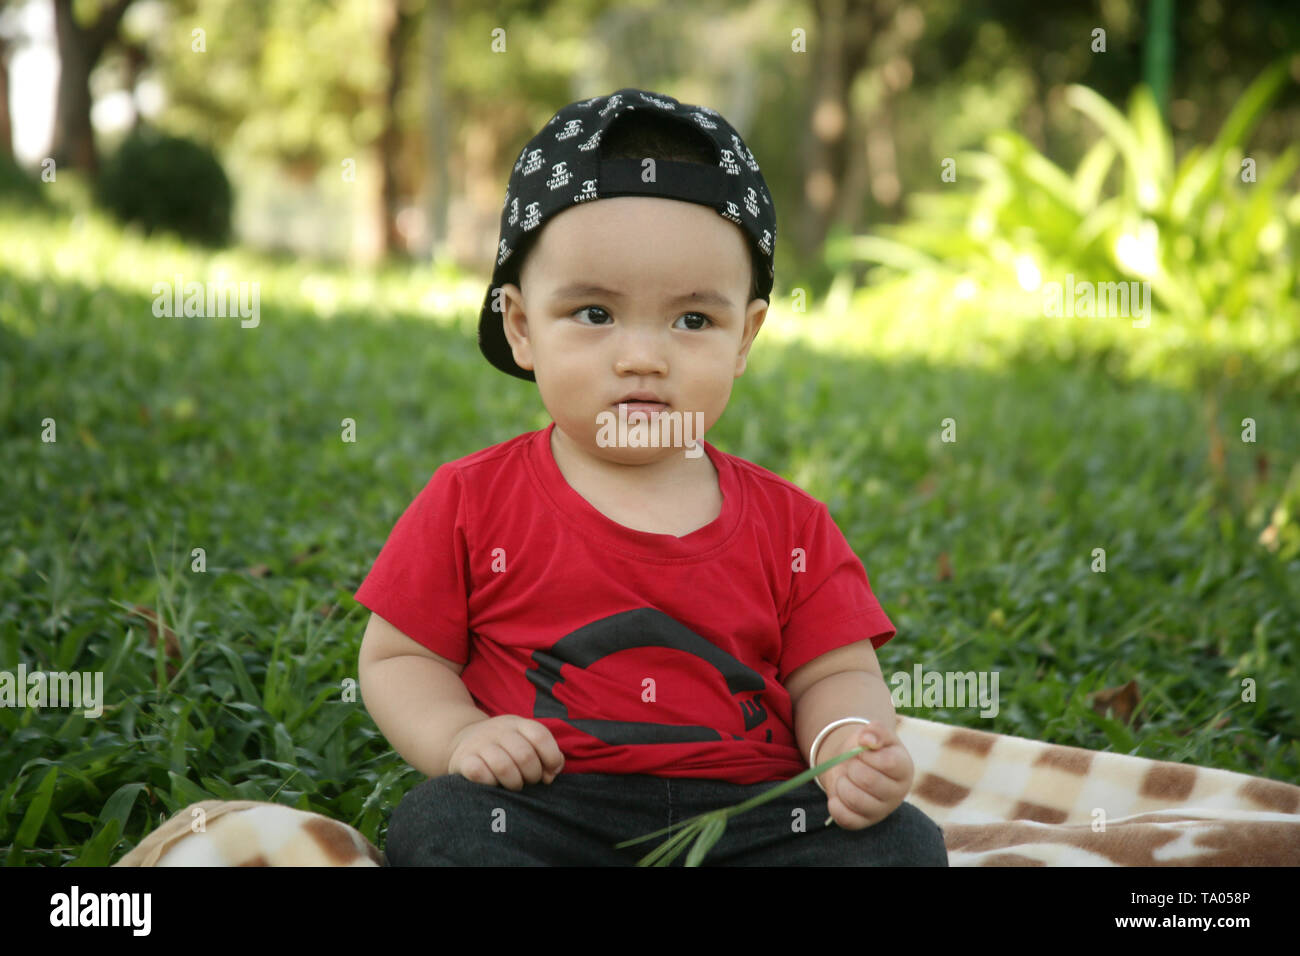 Cute baby boy photo wearing red shirt Stock Photo - Alamy